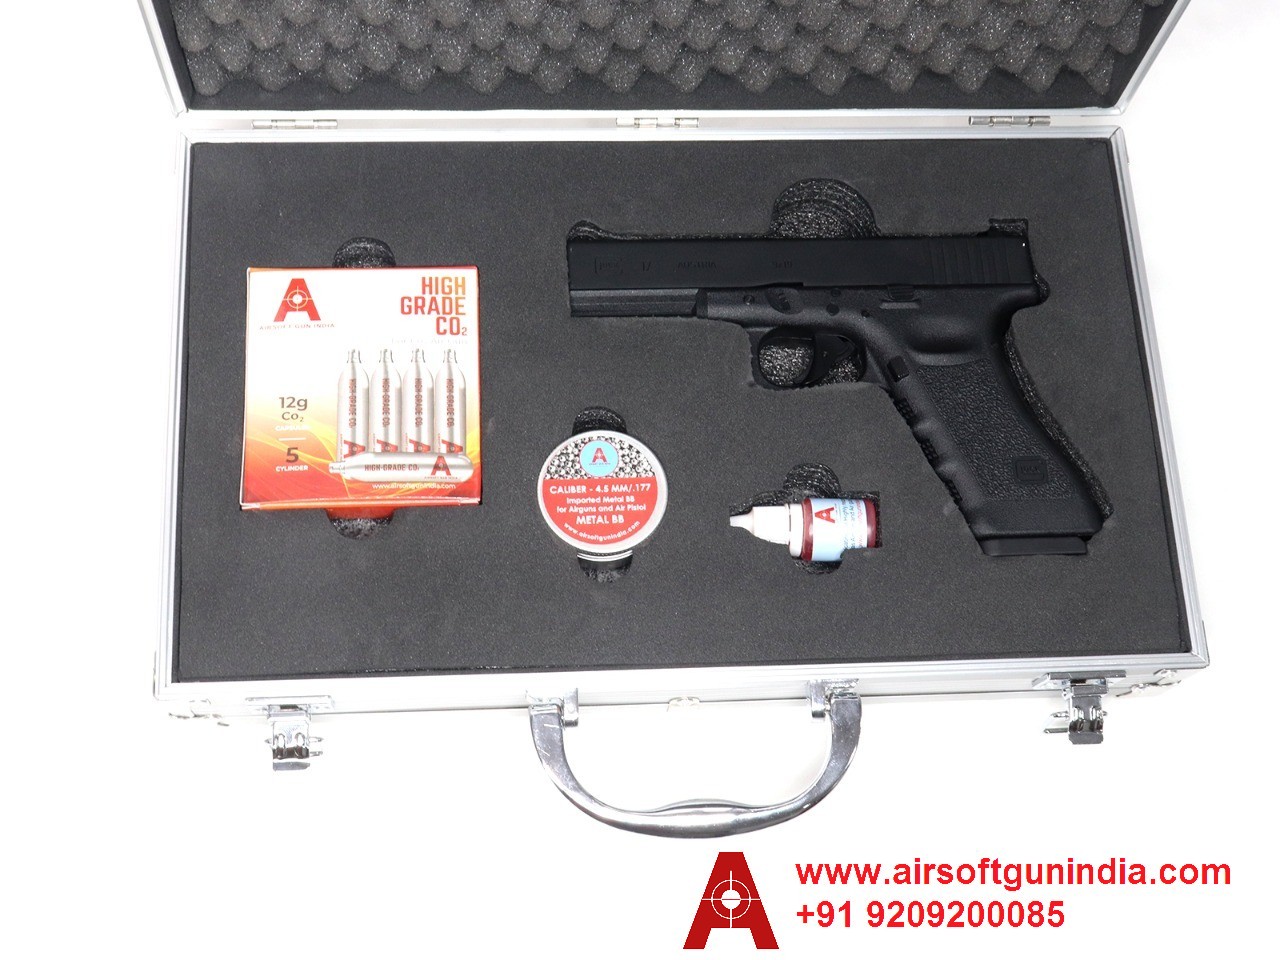 Customized Case For Umarex Glock 17 4.5mm Gen 3 Co2 Air Pistol By Airsoft Gun India